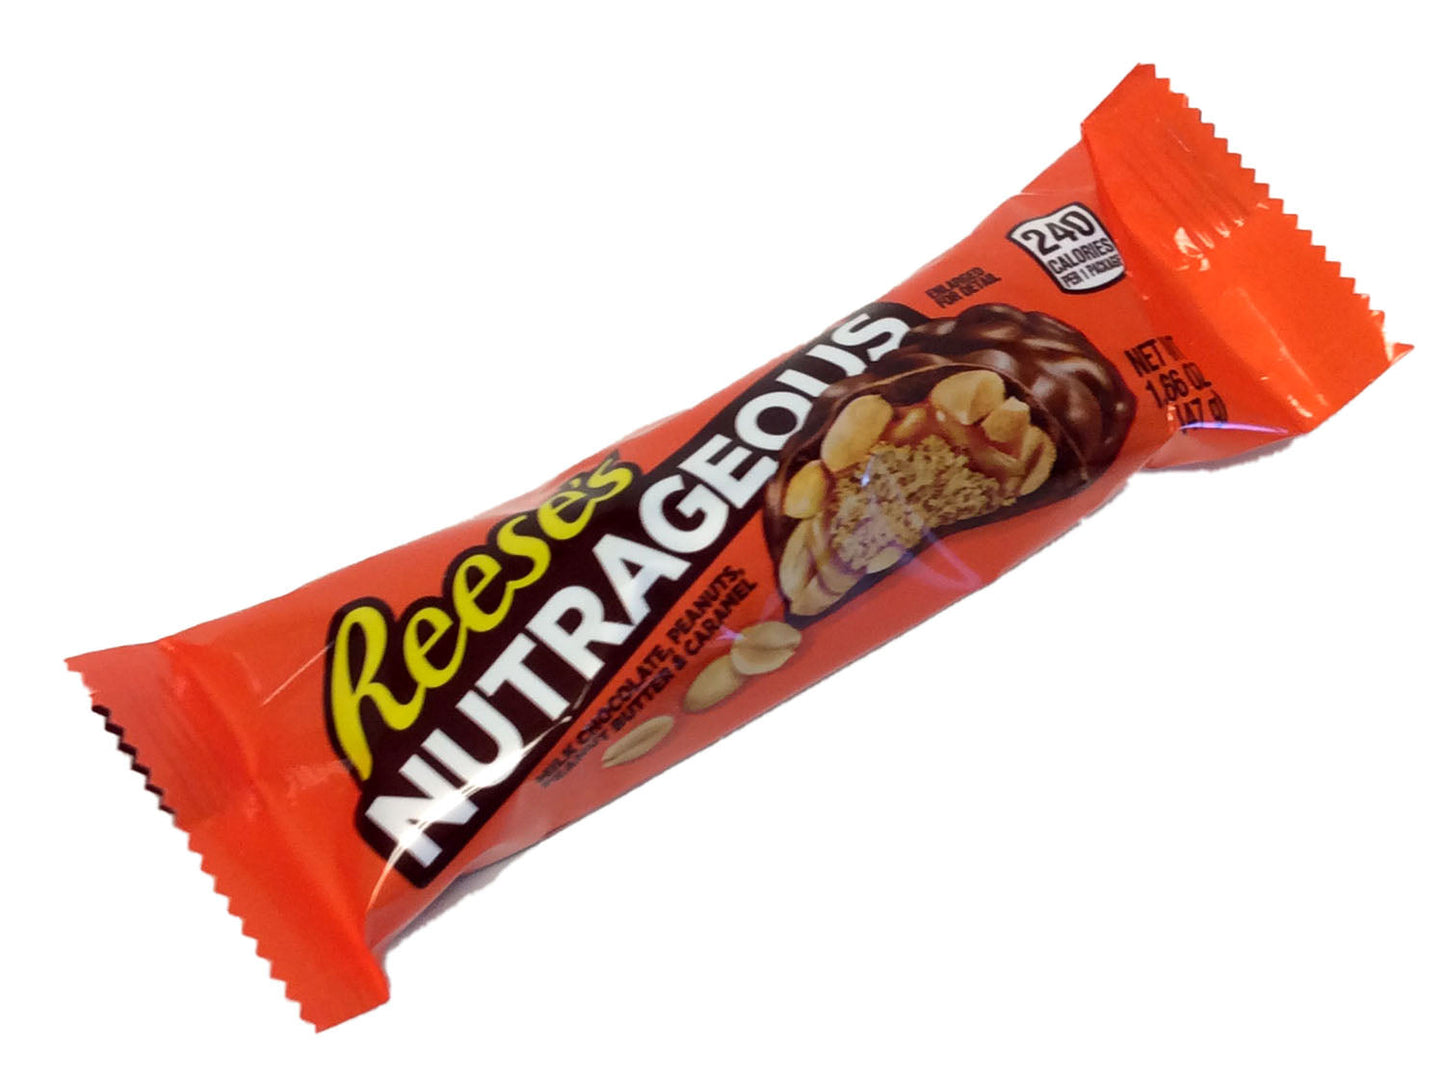 Reese's NutRageous - 1.66 oz bar